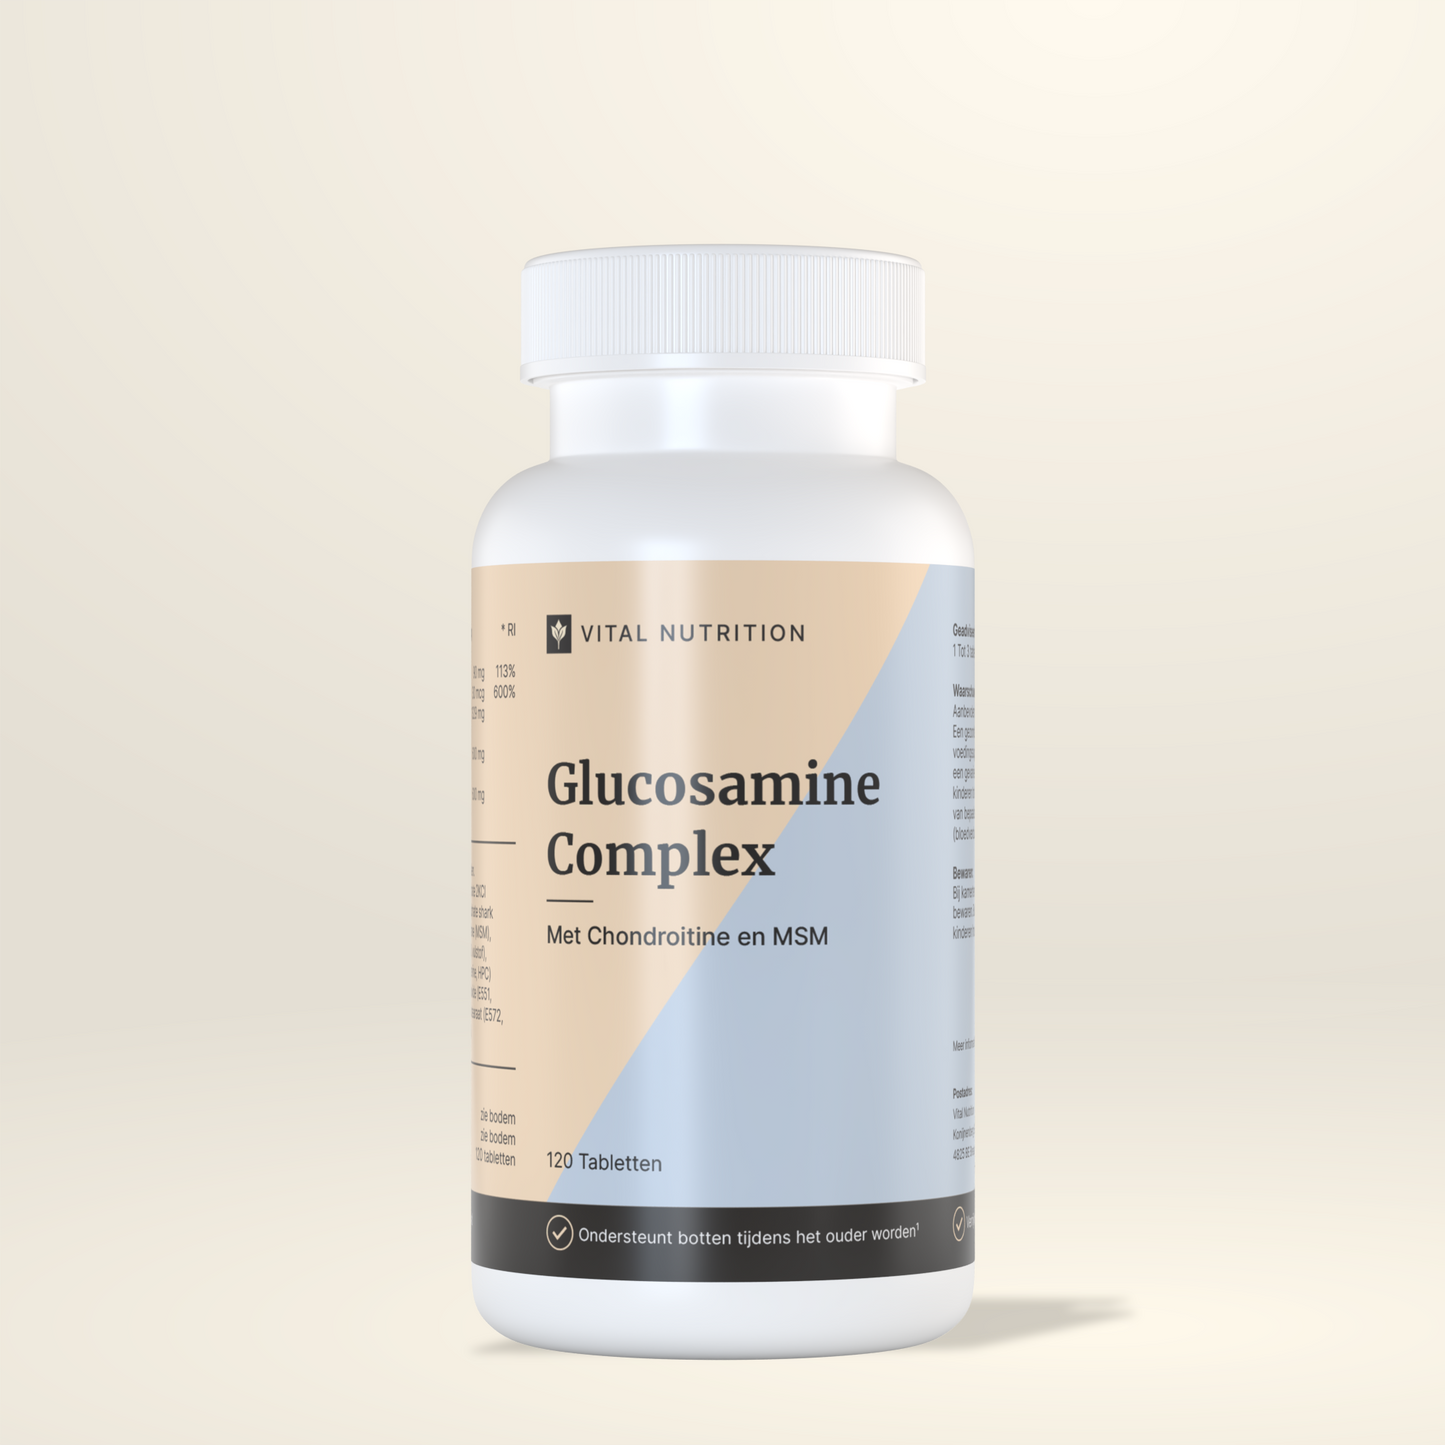 Vital Nutrition Glucosamine Complex